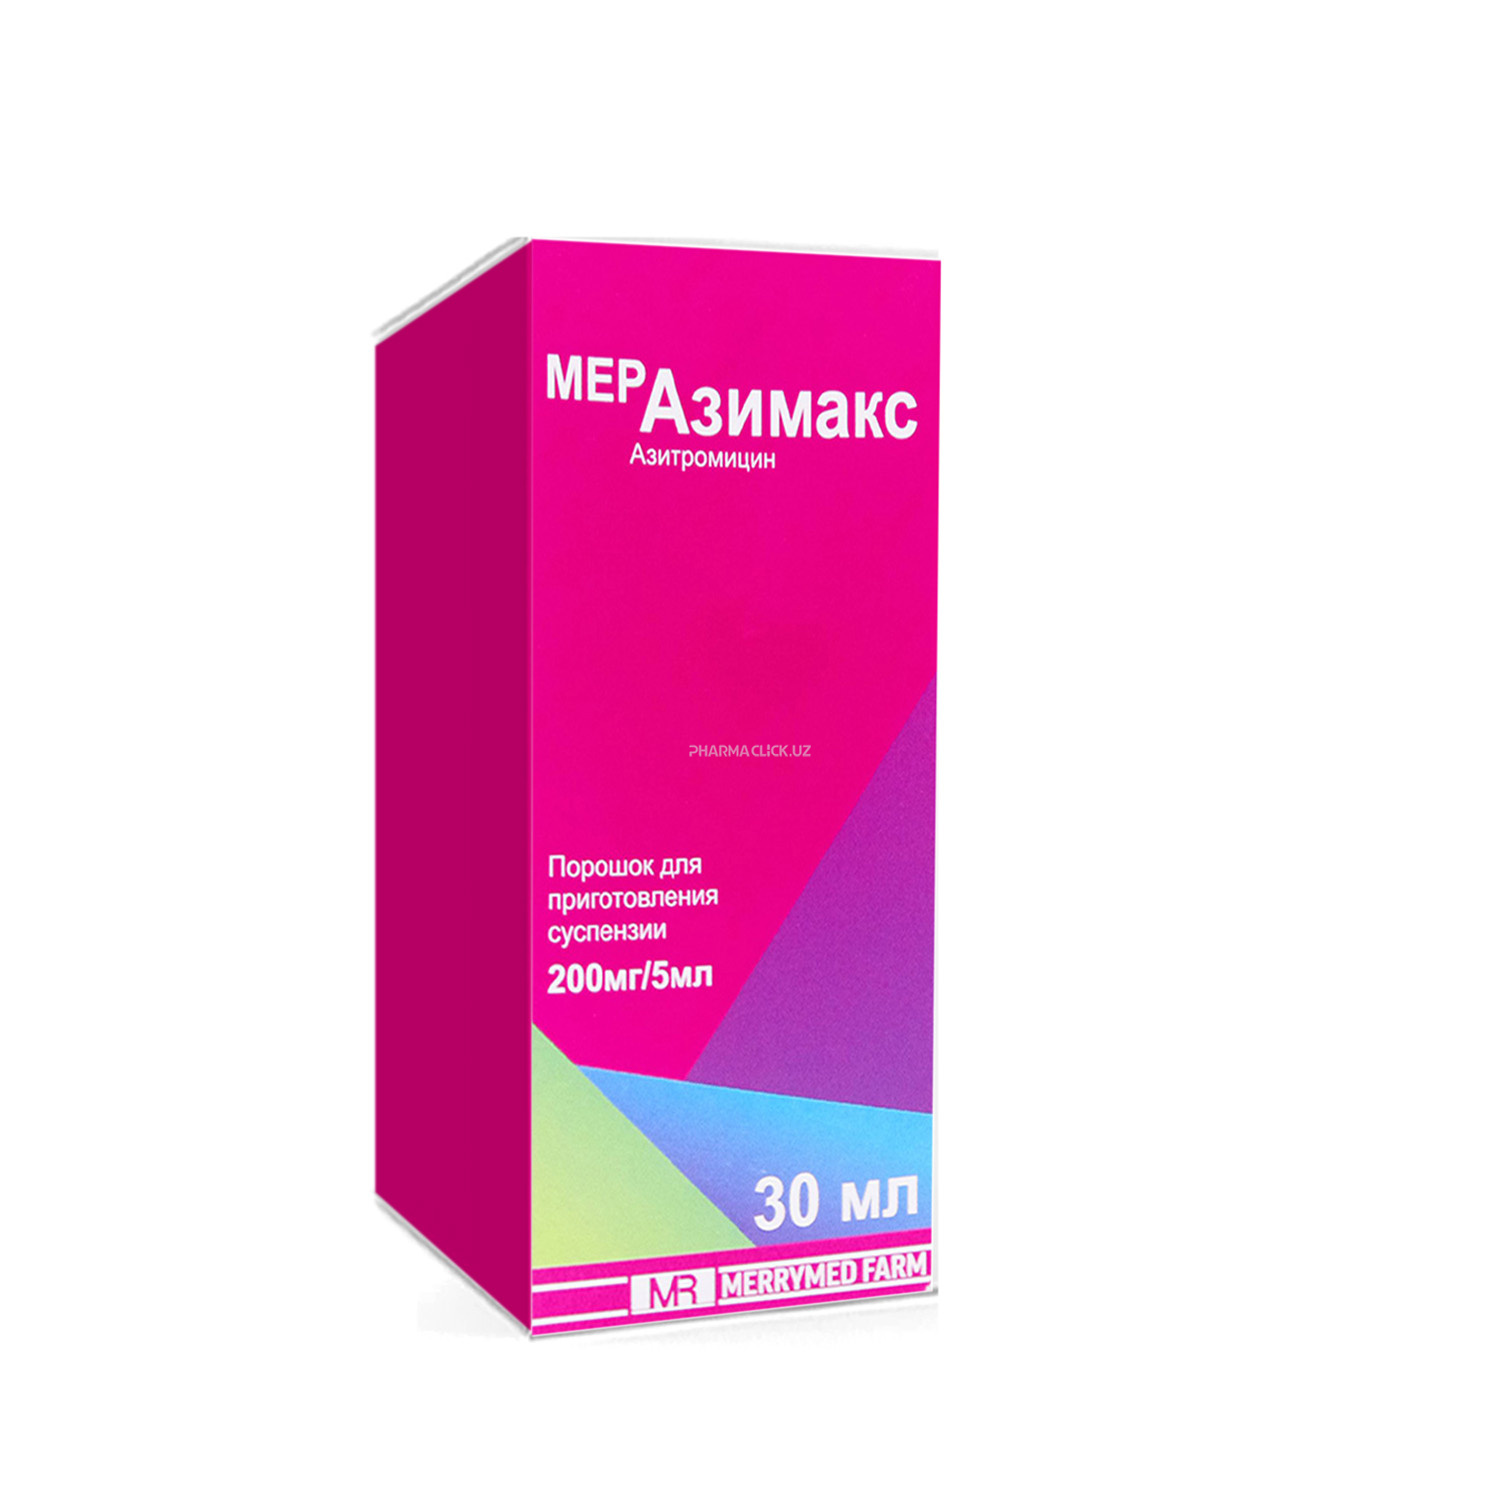 Азимакс  MER 200 мг/5мл  30 мл сусп